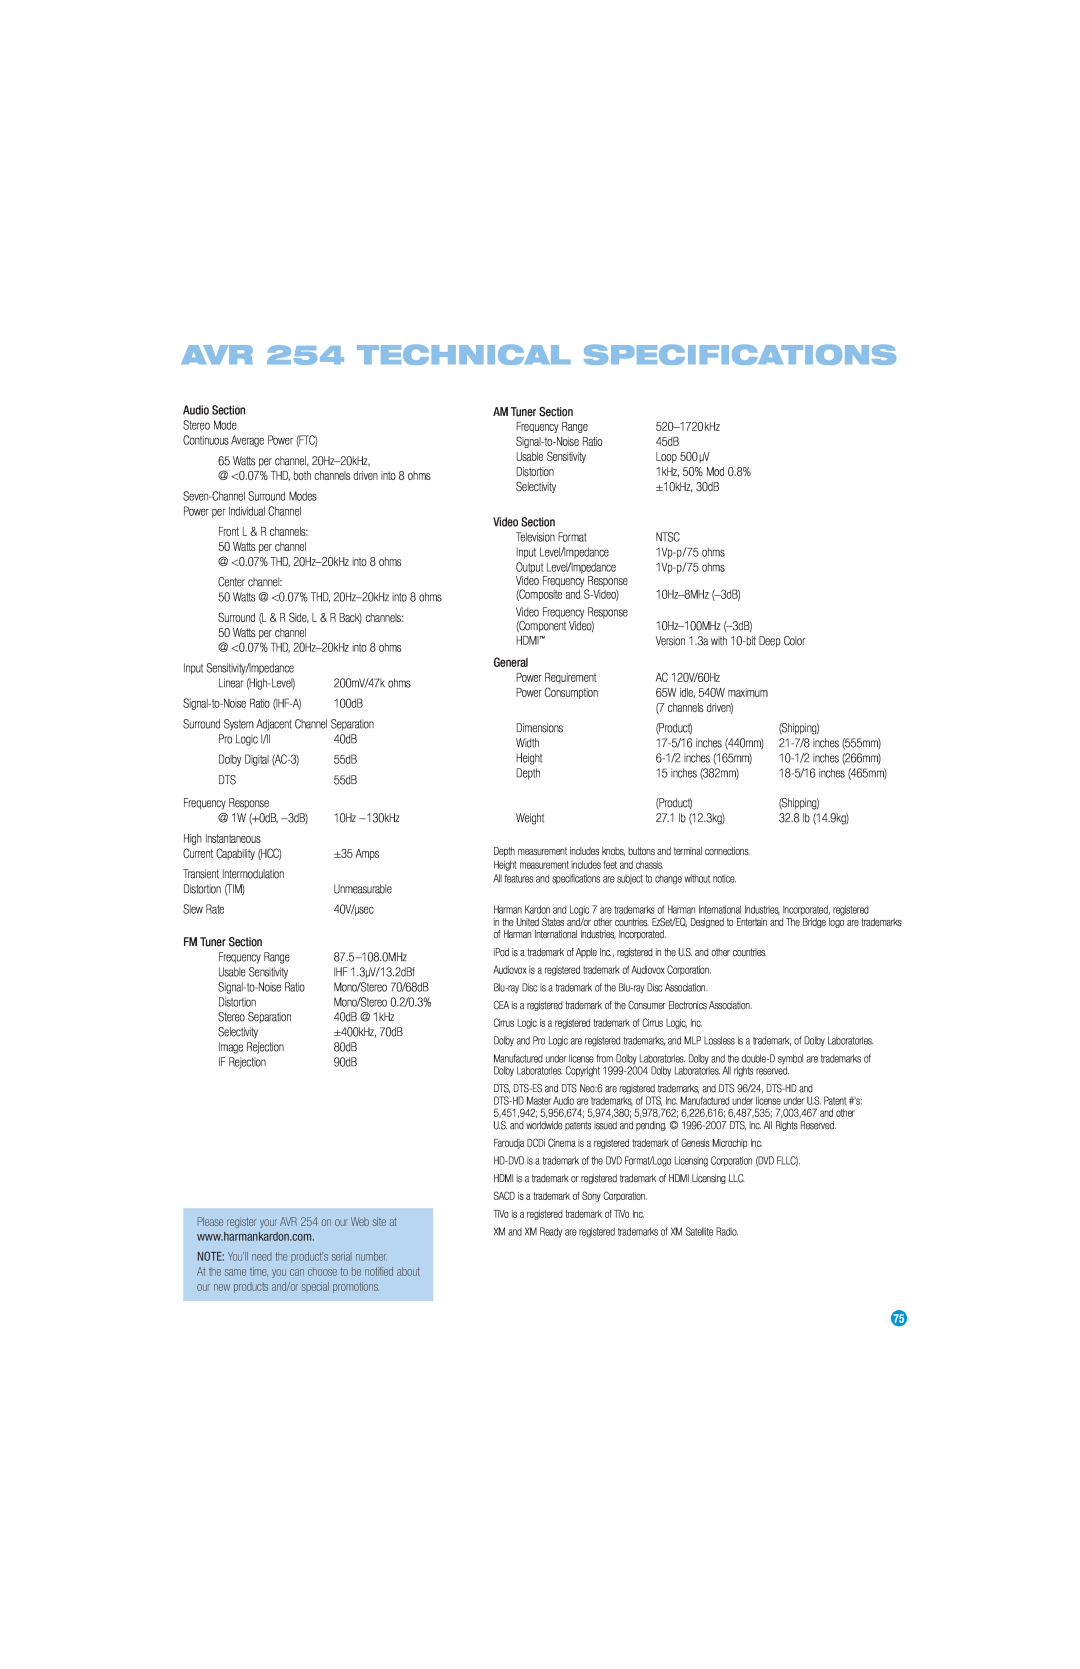 Harman-Kardon owner manual AVR 254 TECHNICAL SPECIFICATIONS 